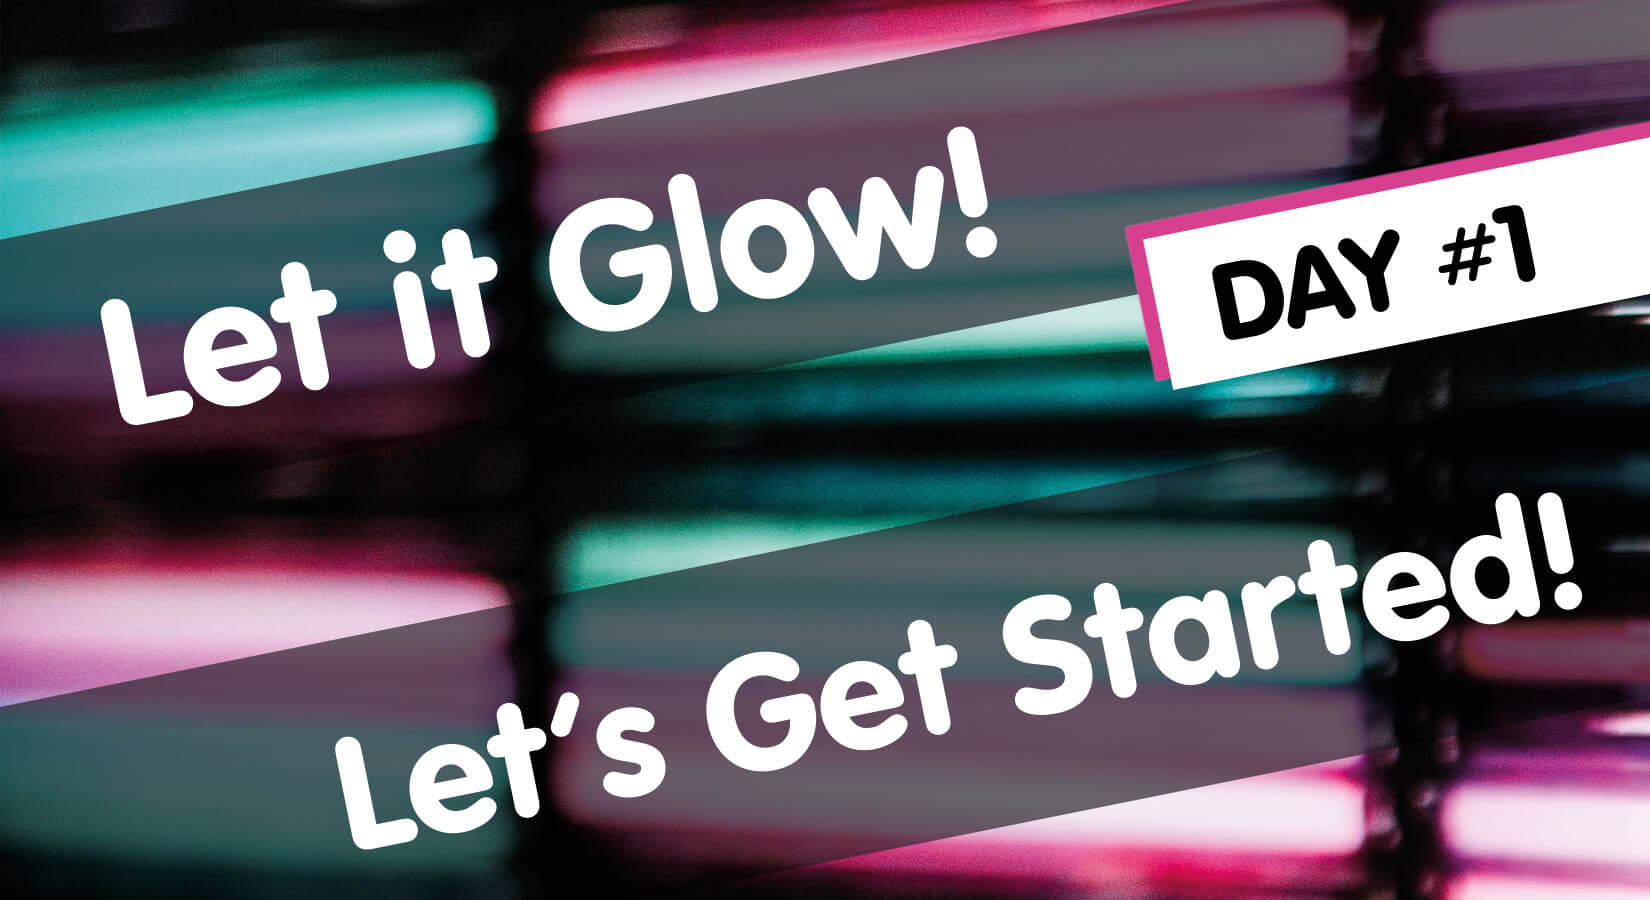 Let it Glow Maker Advent Calendar Day #1: Let's Get Started!